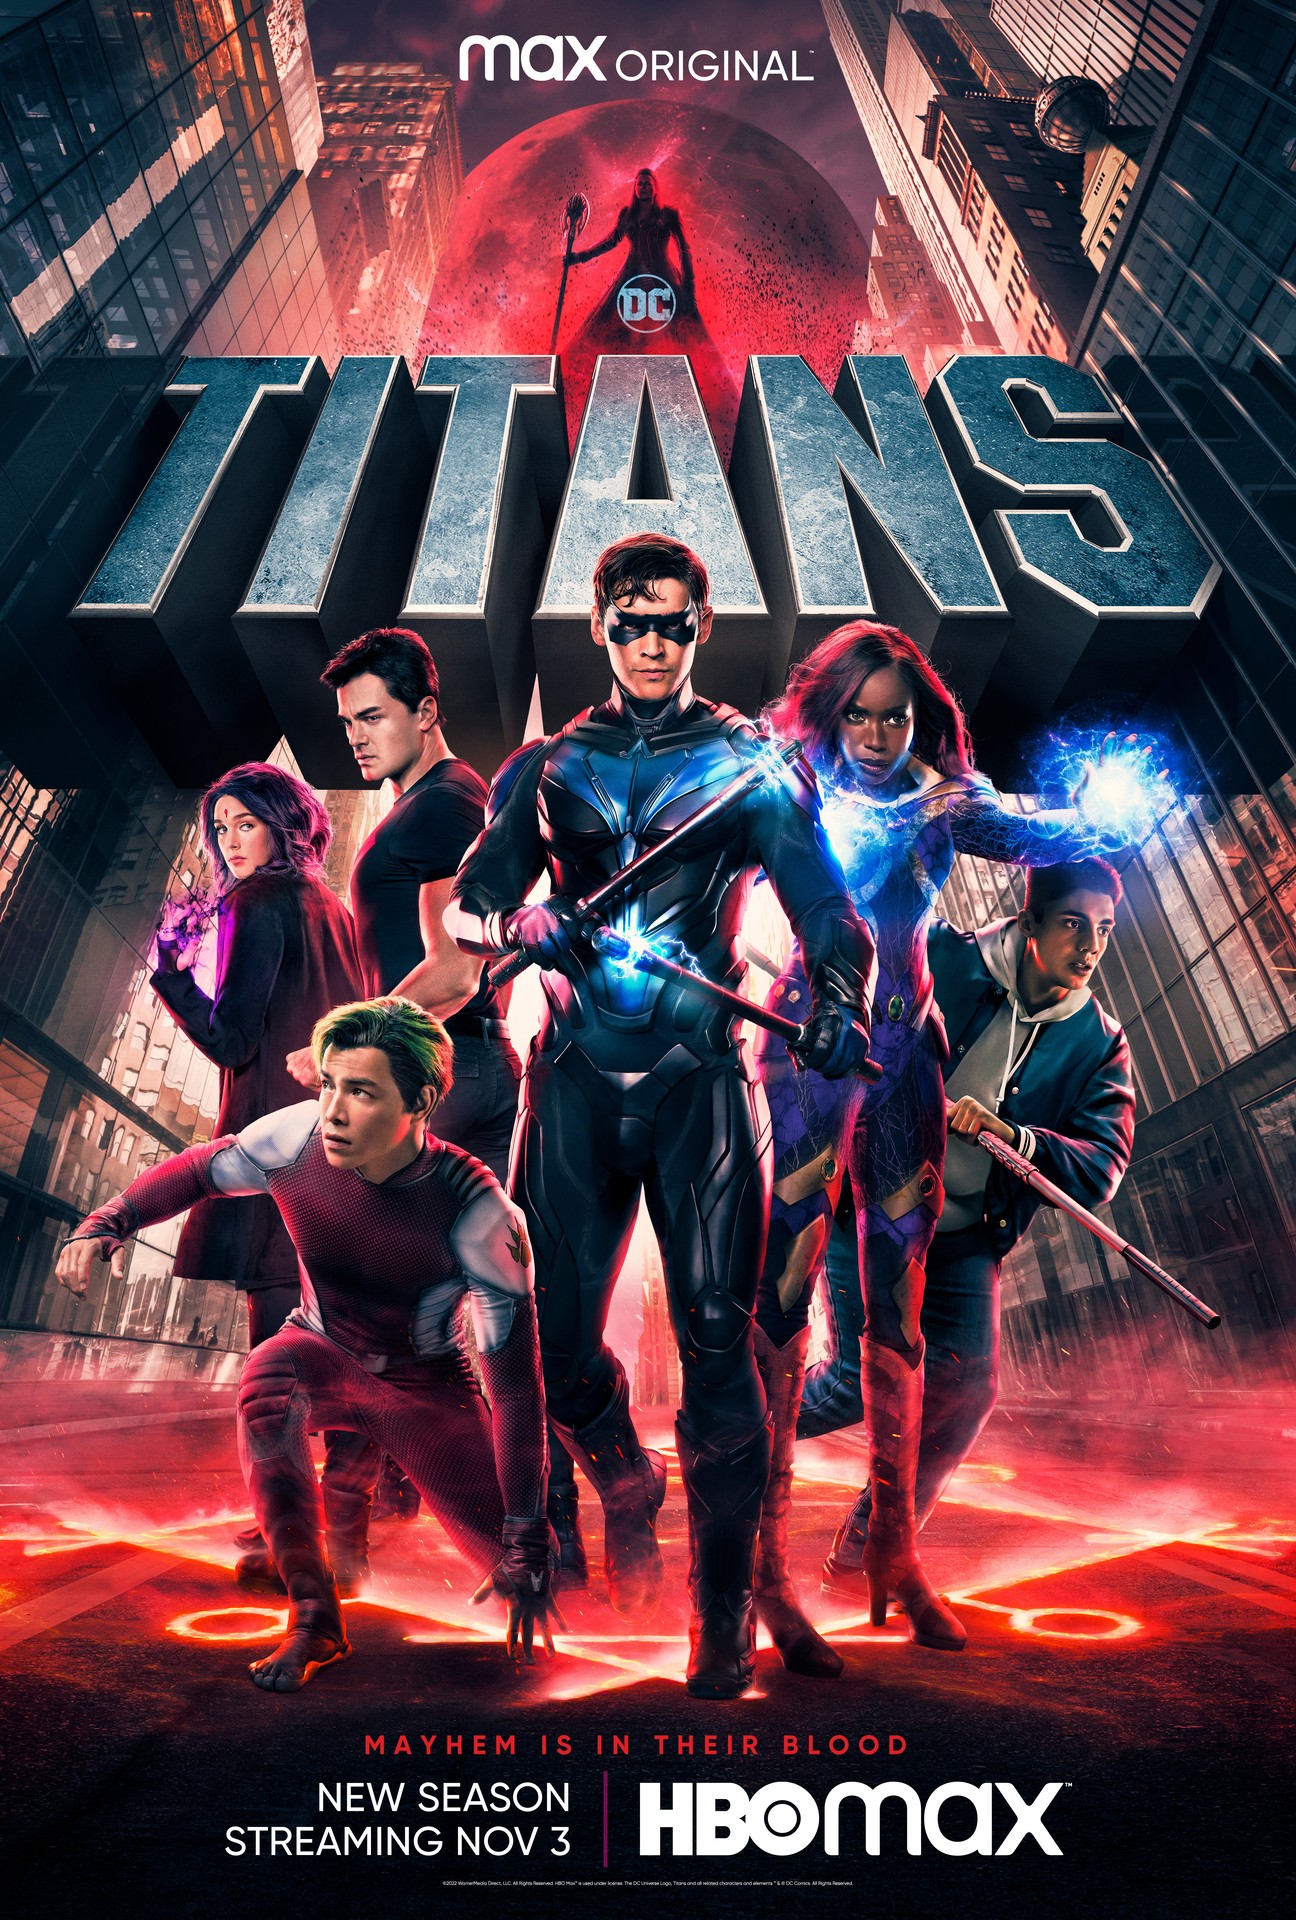 Attack on Titan - Rotten Tomatoes